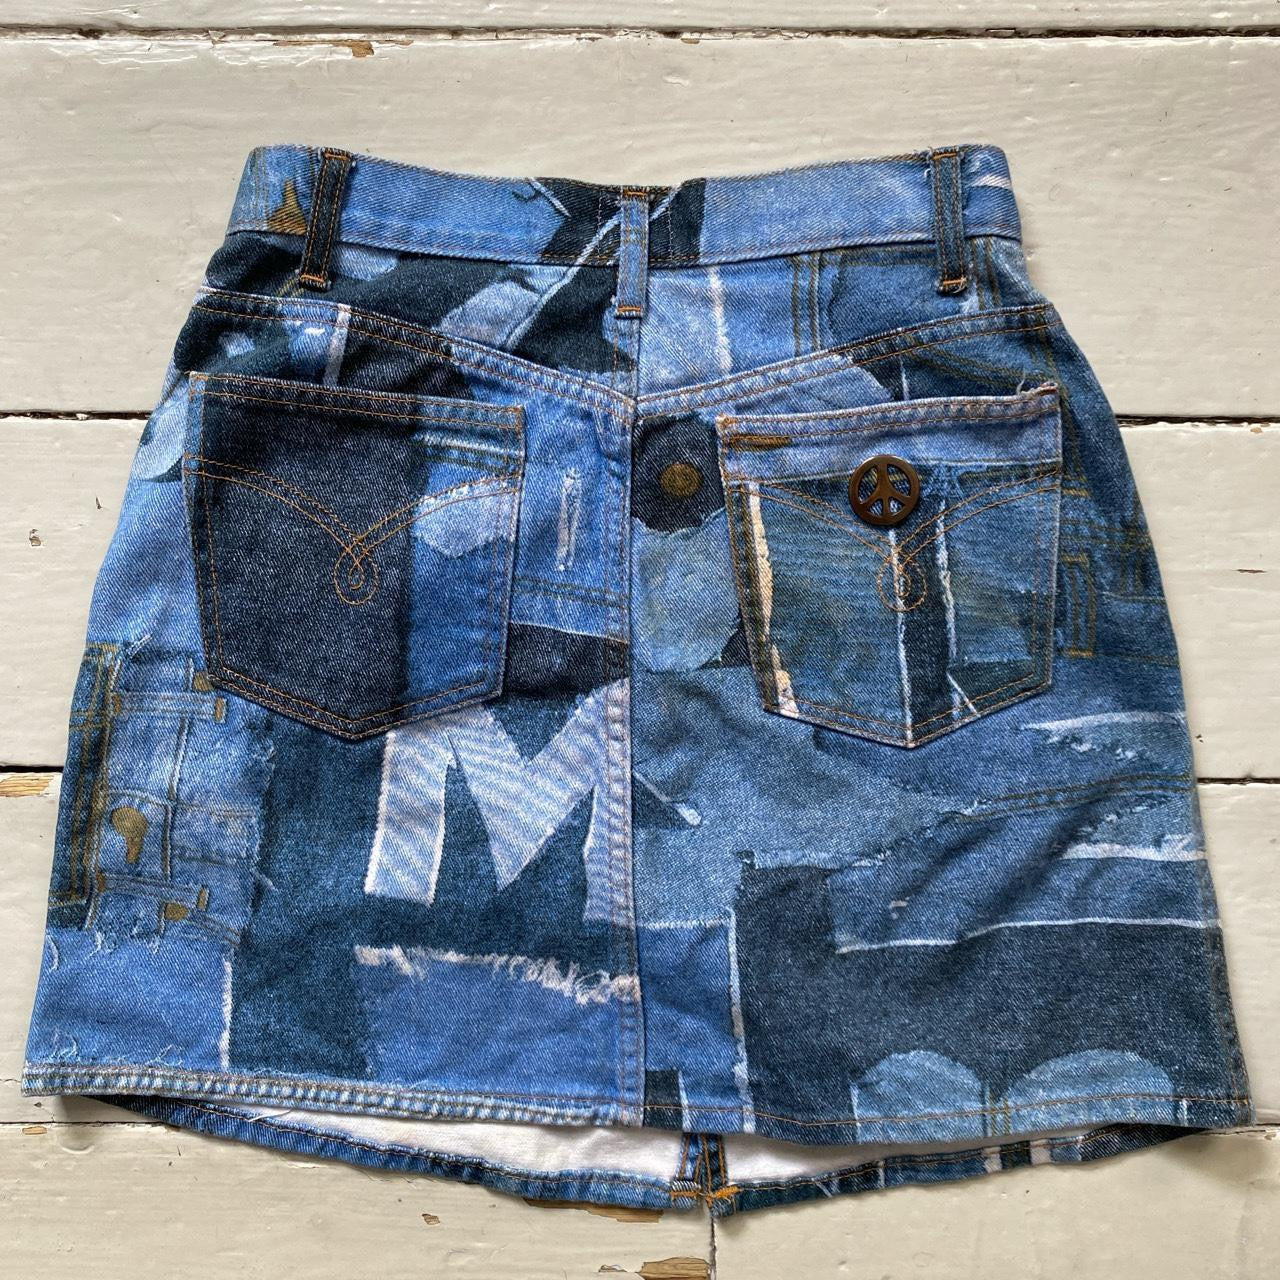 Moschino Jeans Vintage Denim Skirt (UK 14)